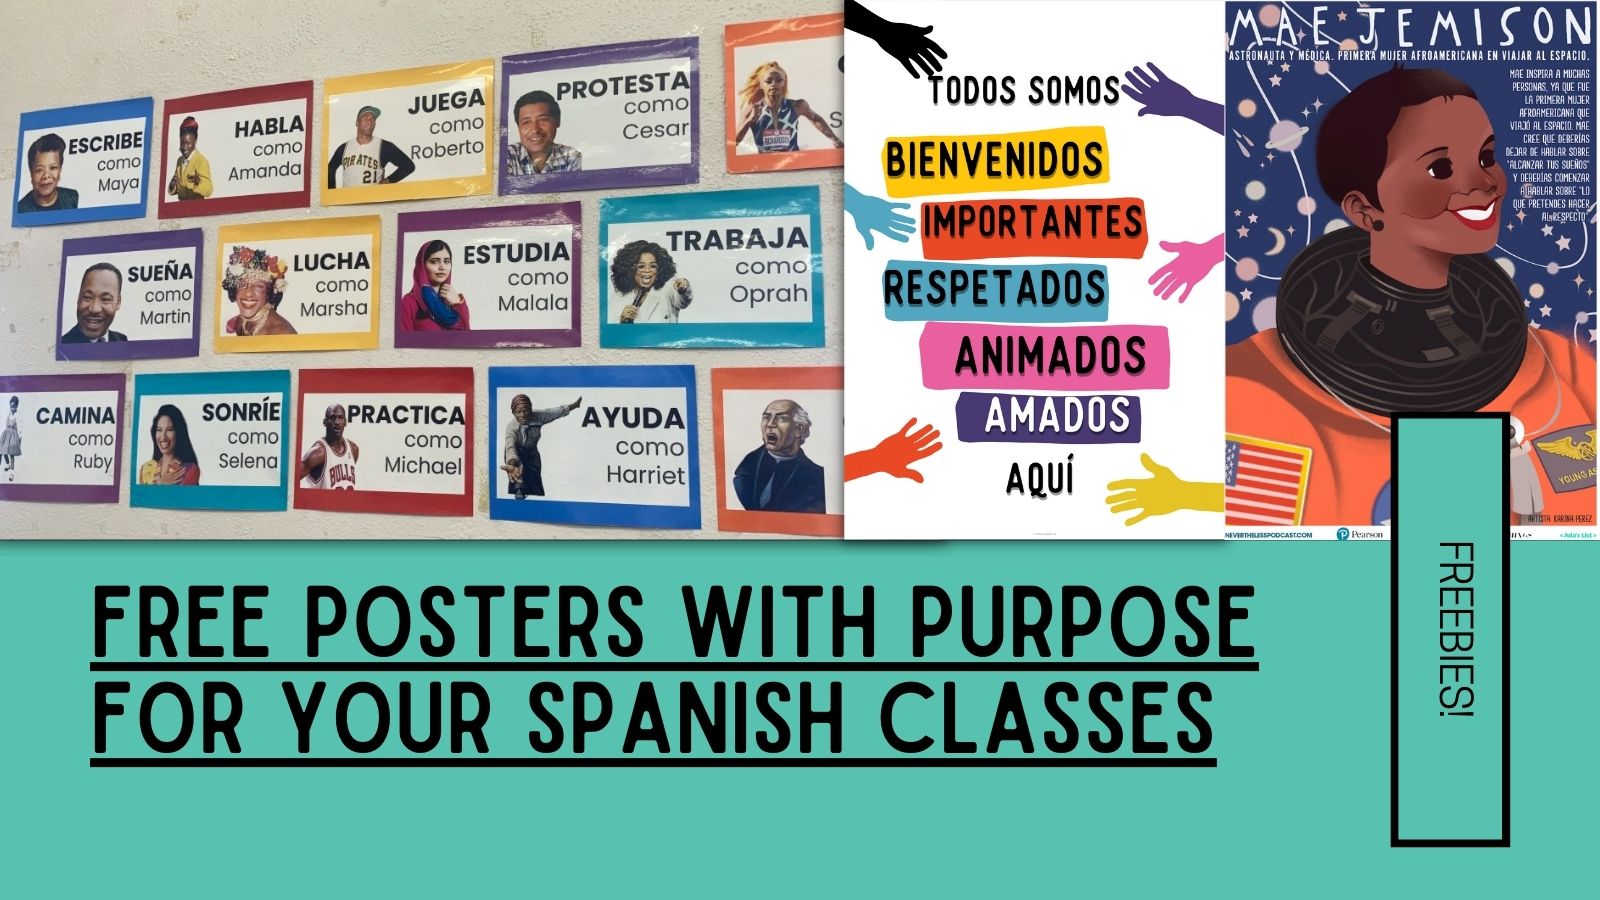 spanish classroom